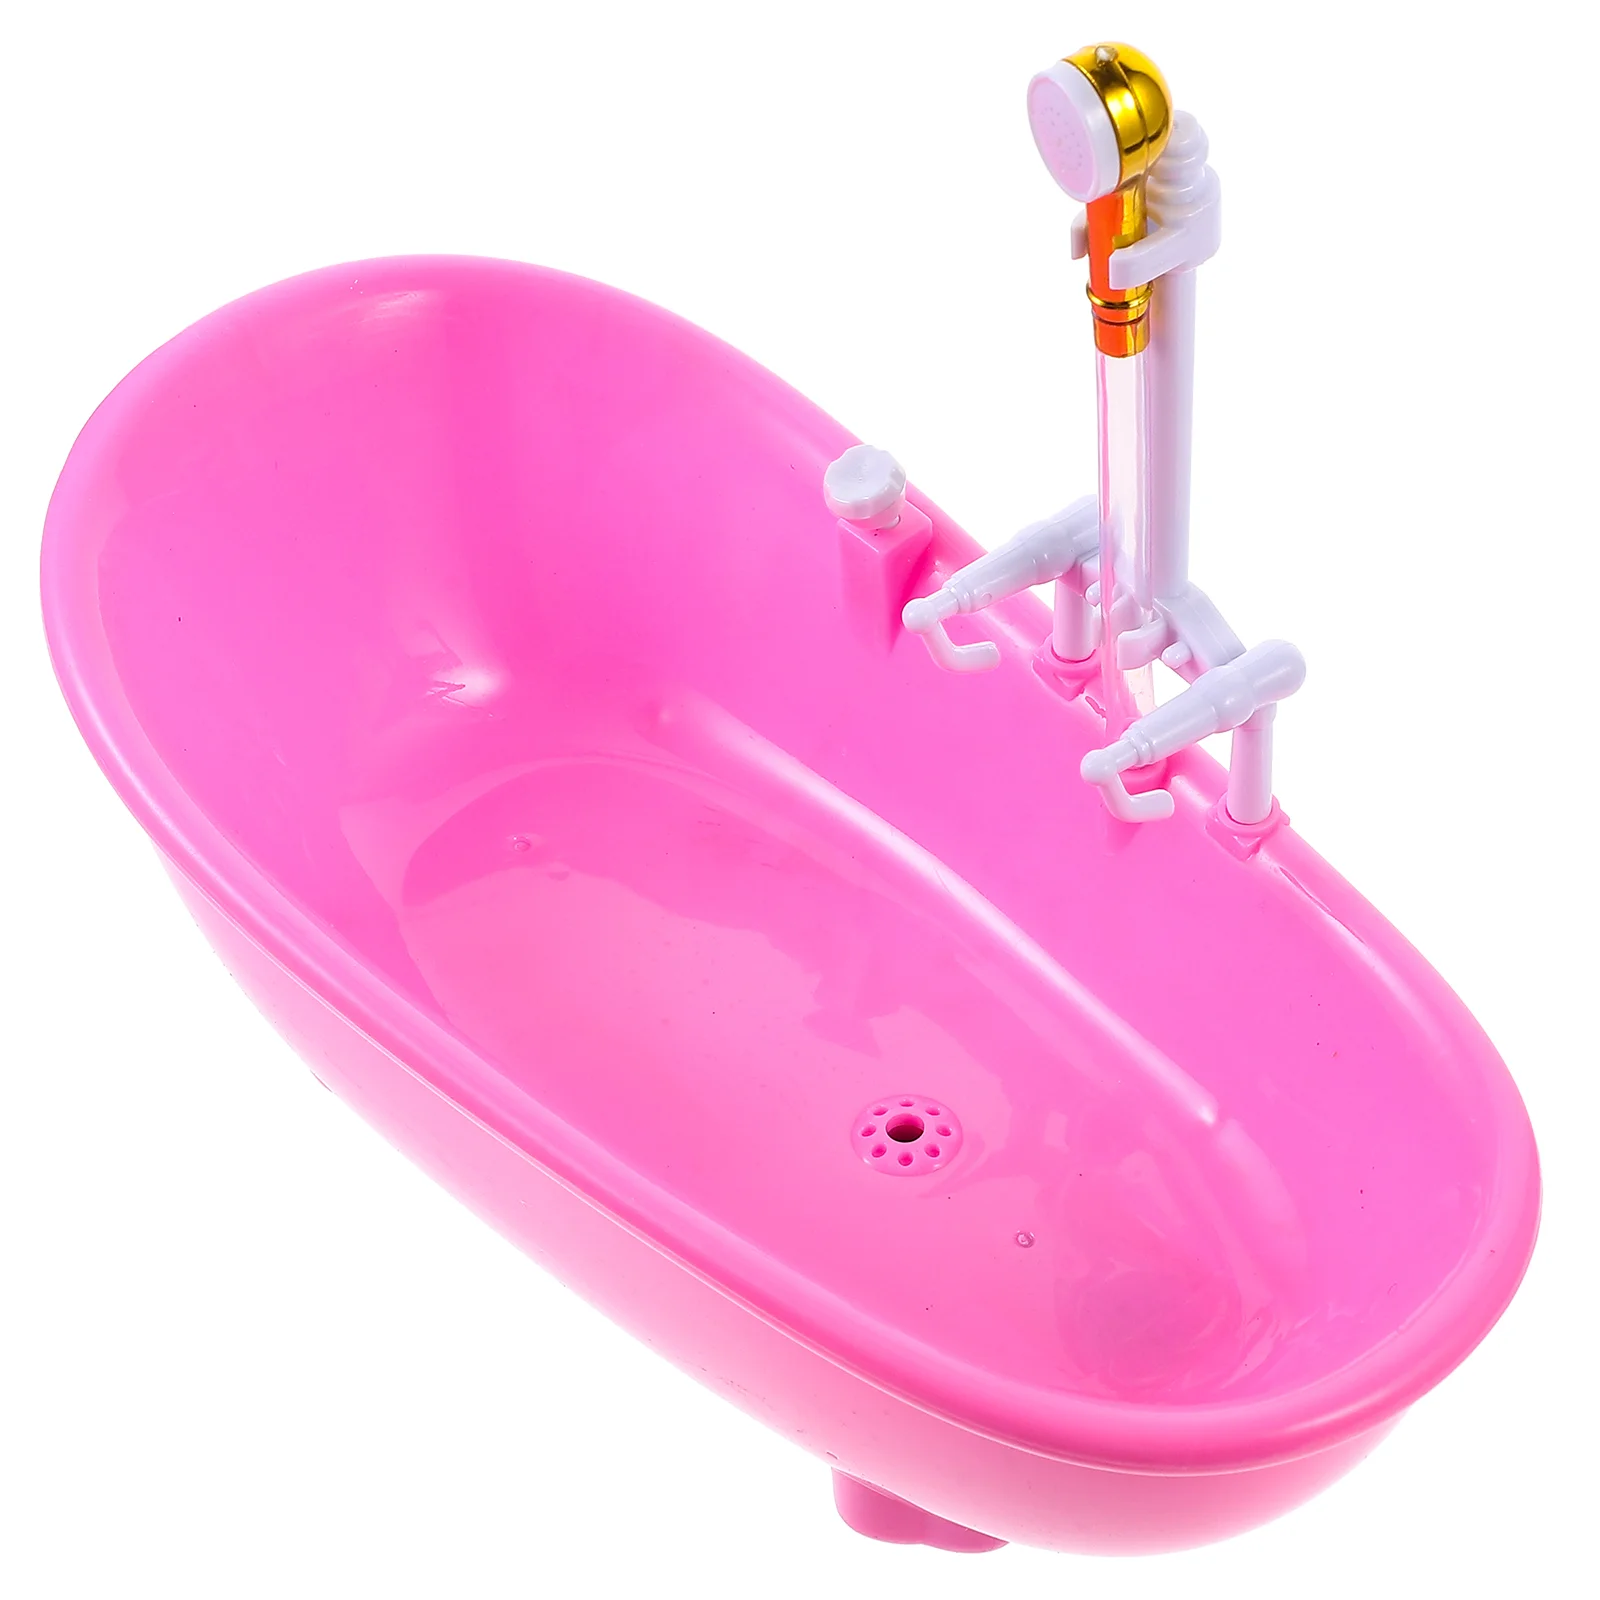 

Bathing Tub Bathtub Shower Pool Swimming Bucket Electric Miniature Toys for Kids